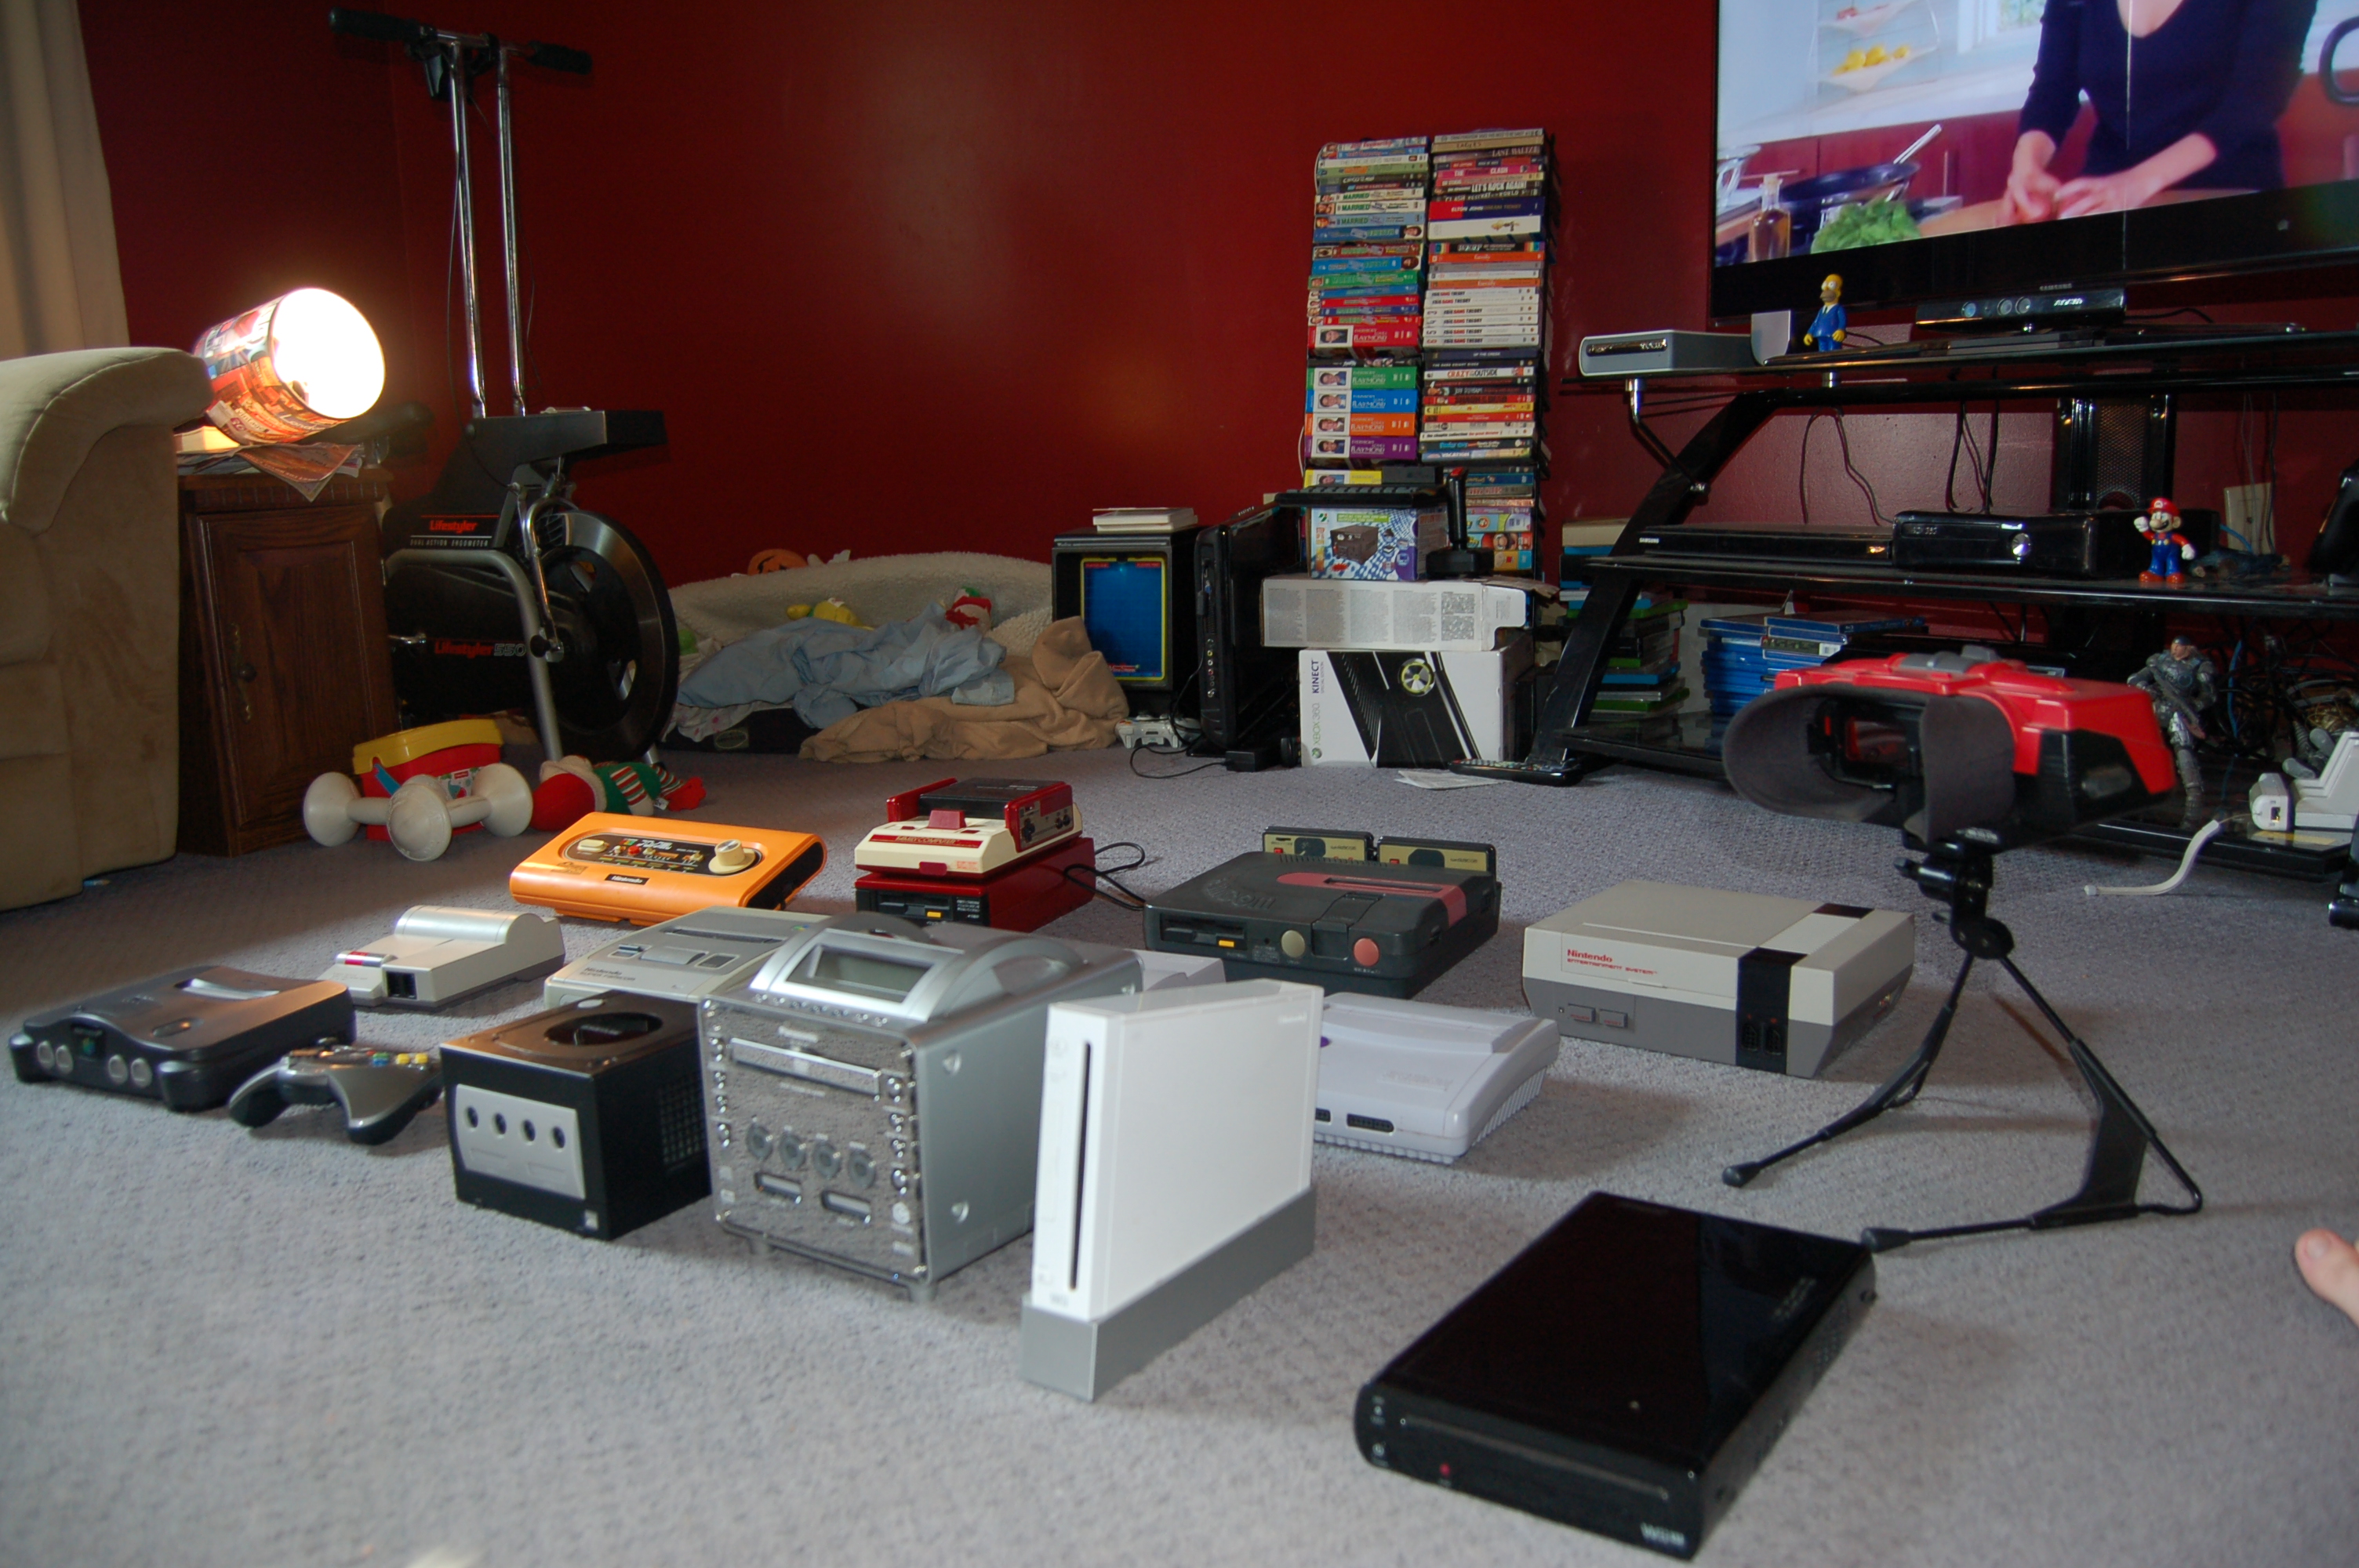 TV-Game Block, Famicom w/ Disk system, Twin Famicom, NES, NES toploader, Super Famicom, SNES, SNES Mini, Virtual Boy, N64, iQue, Gamecube, Panasonic Q, Wii, Wii U